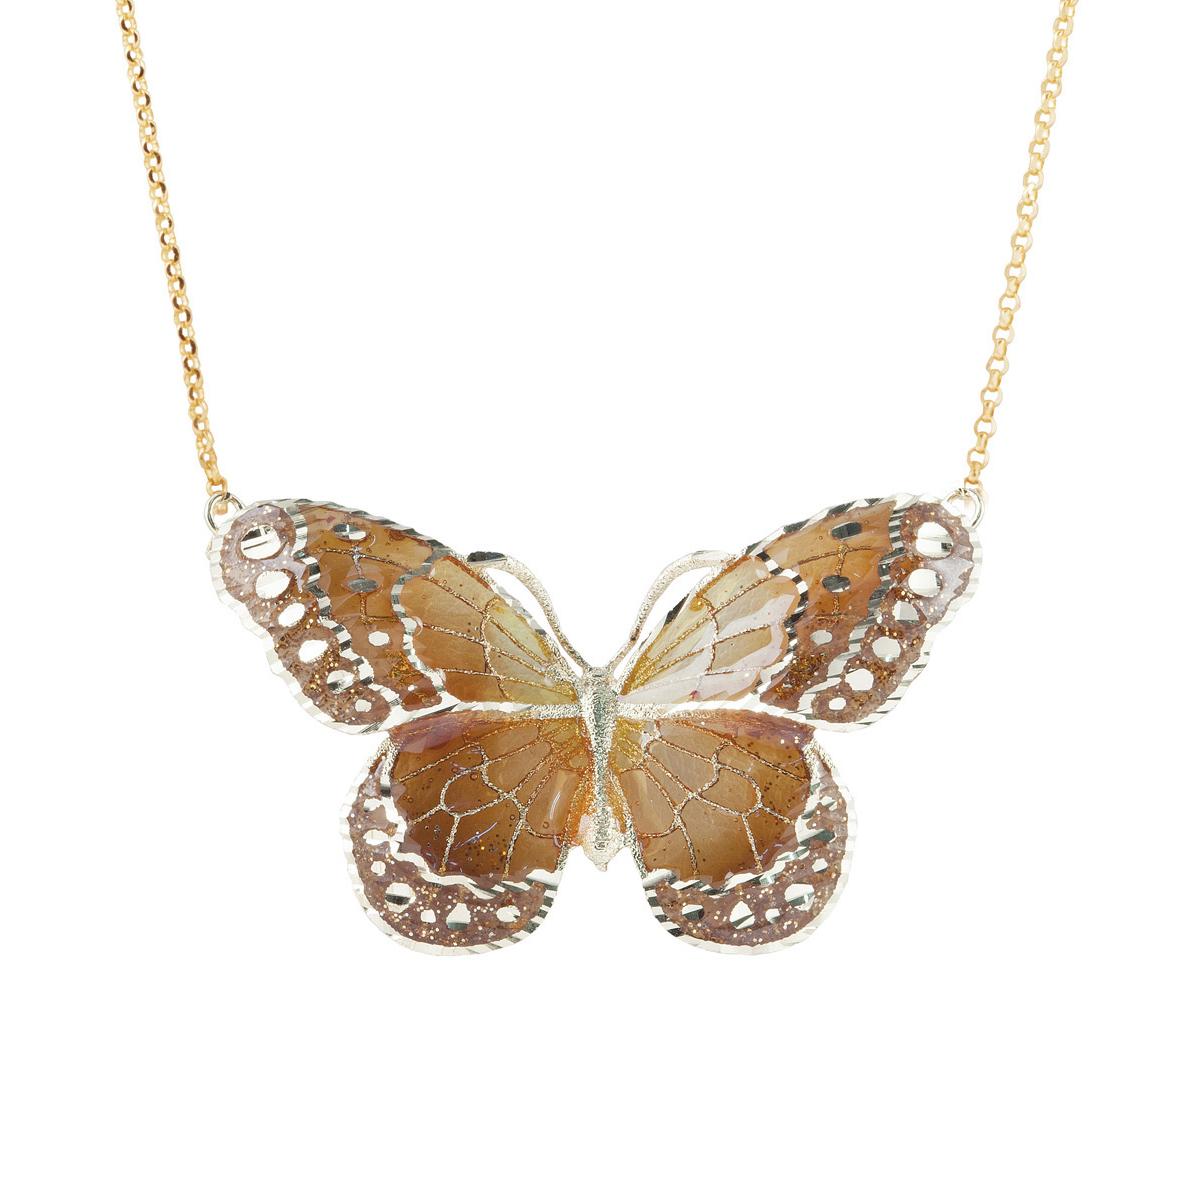 https://www.artlineajewels.com/wp-content/uploads/sites/2/2022/05/f_480/18-kt-gold-enamelled-butterfly-necklace-2.jpg